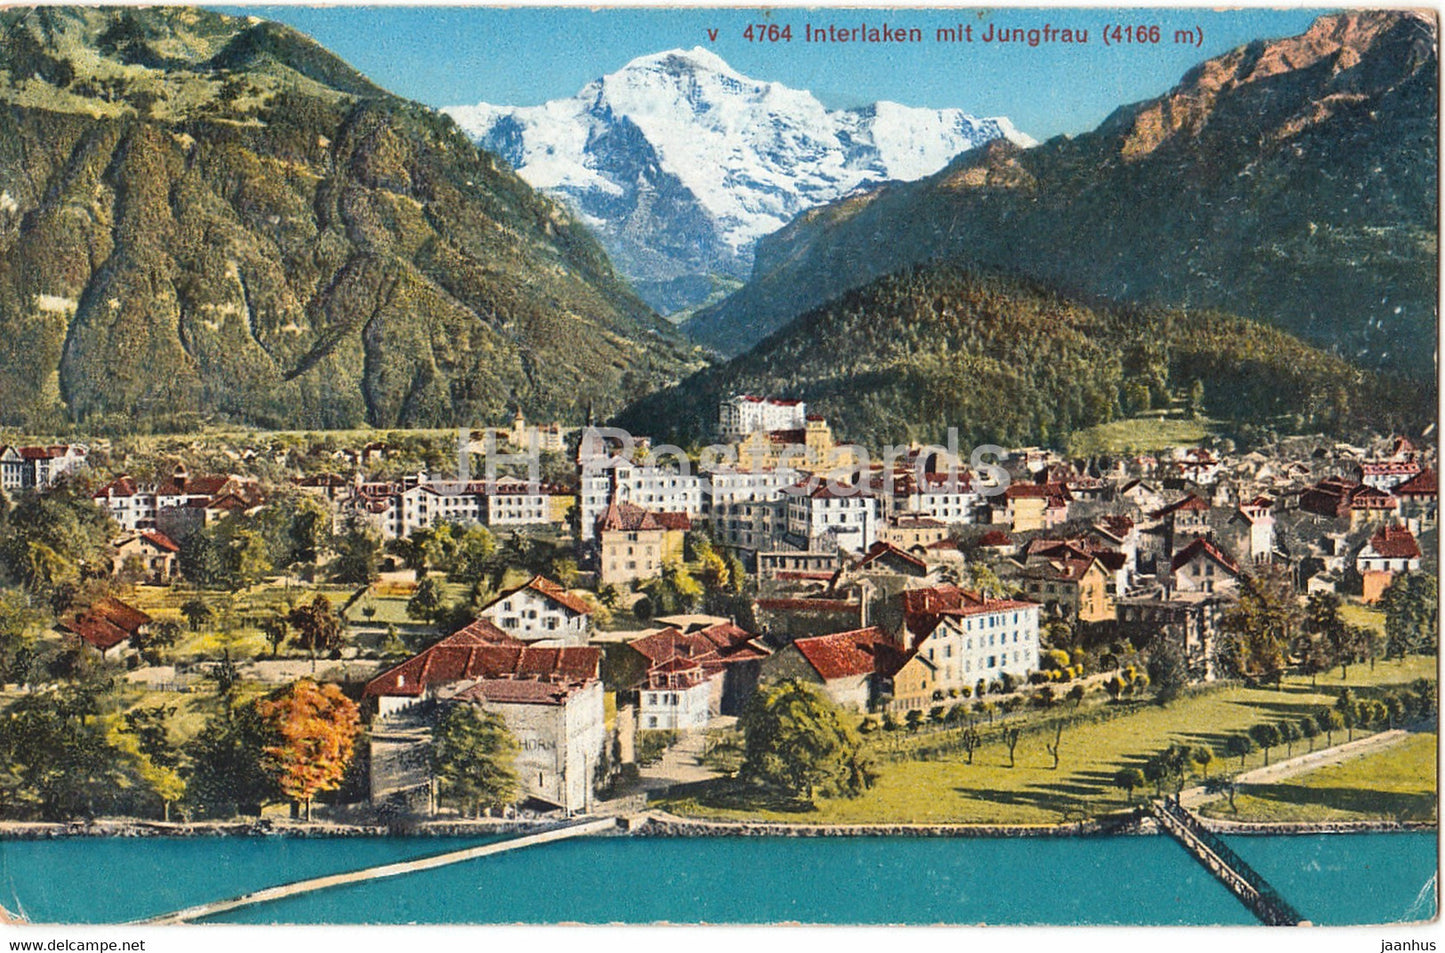 Interlaken mit Jungfrau 4166 m - 4764 - old postcard - 1947 - Switzerland - used - JH Postcards